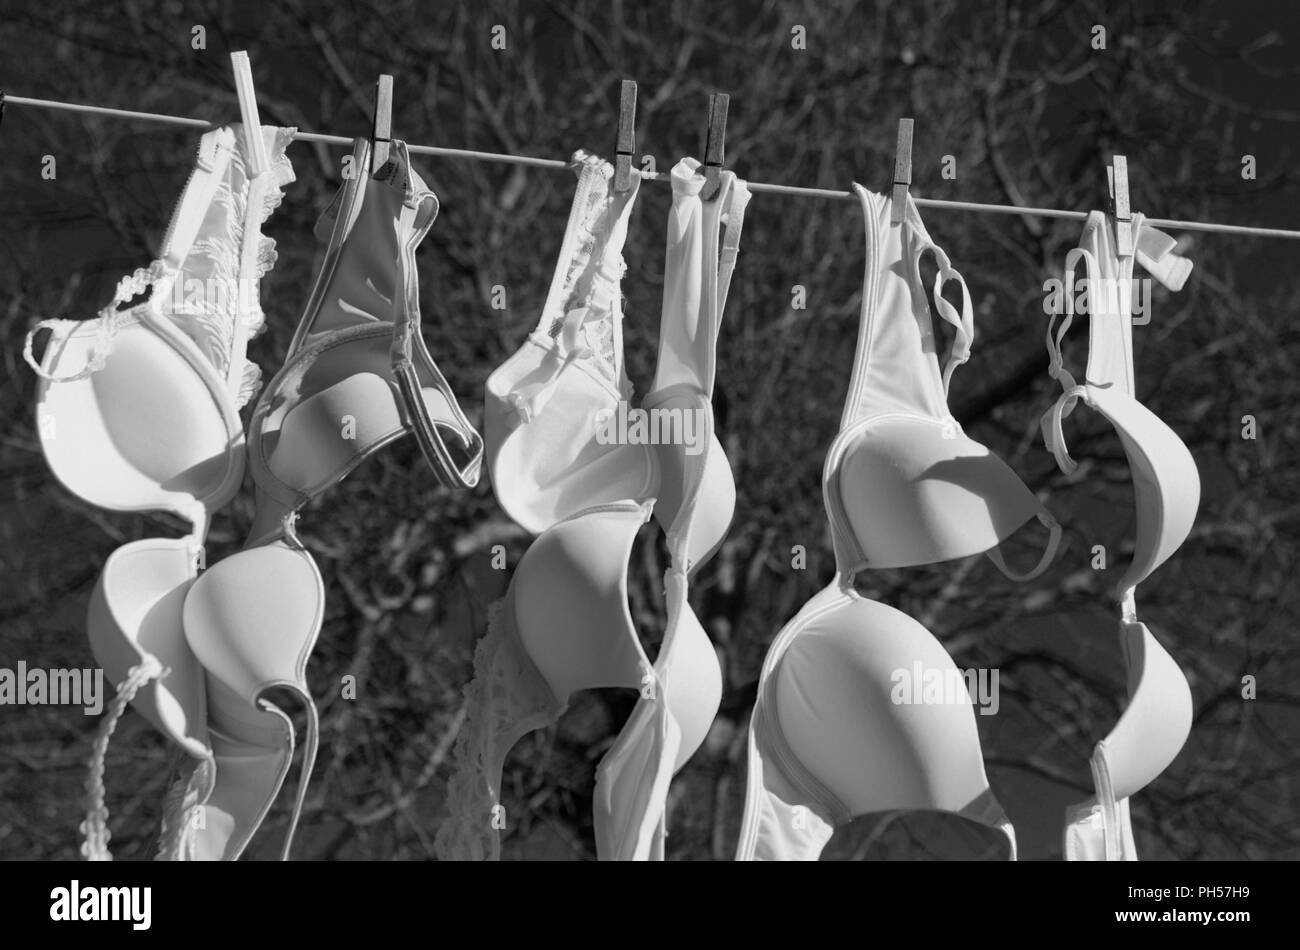 laundry line full of women's bras drying in sun Stock Photo - Alamy